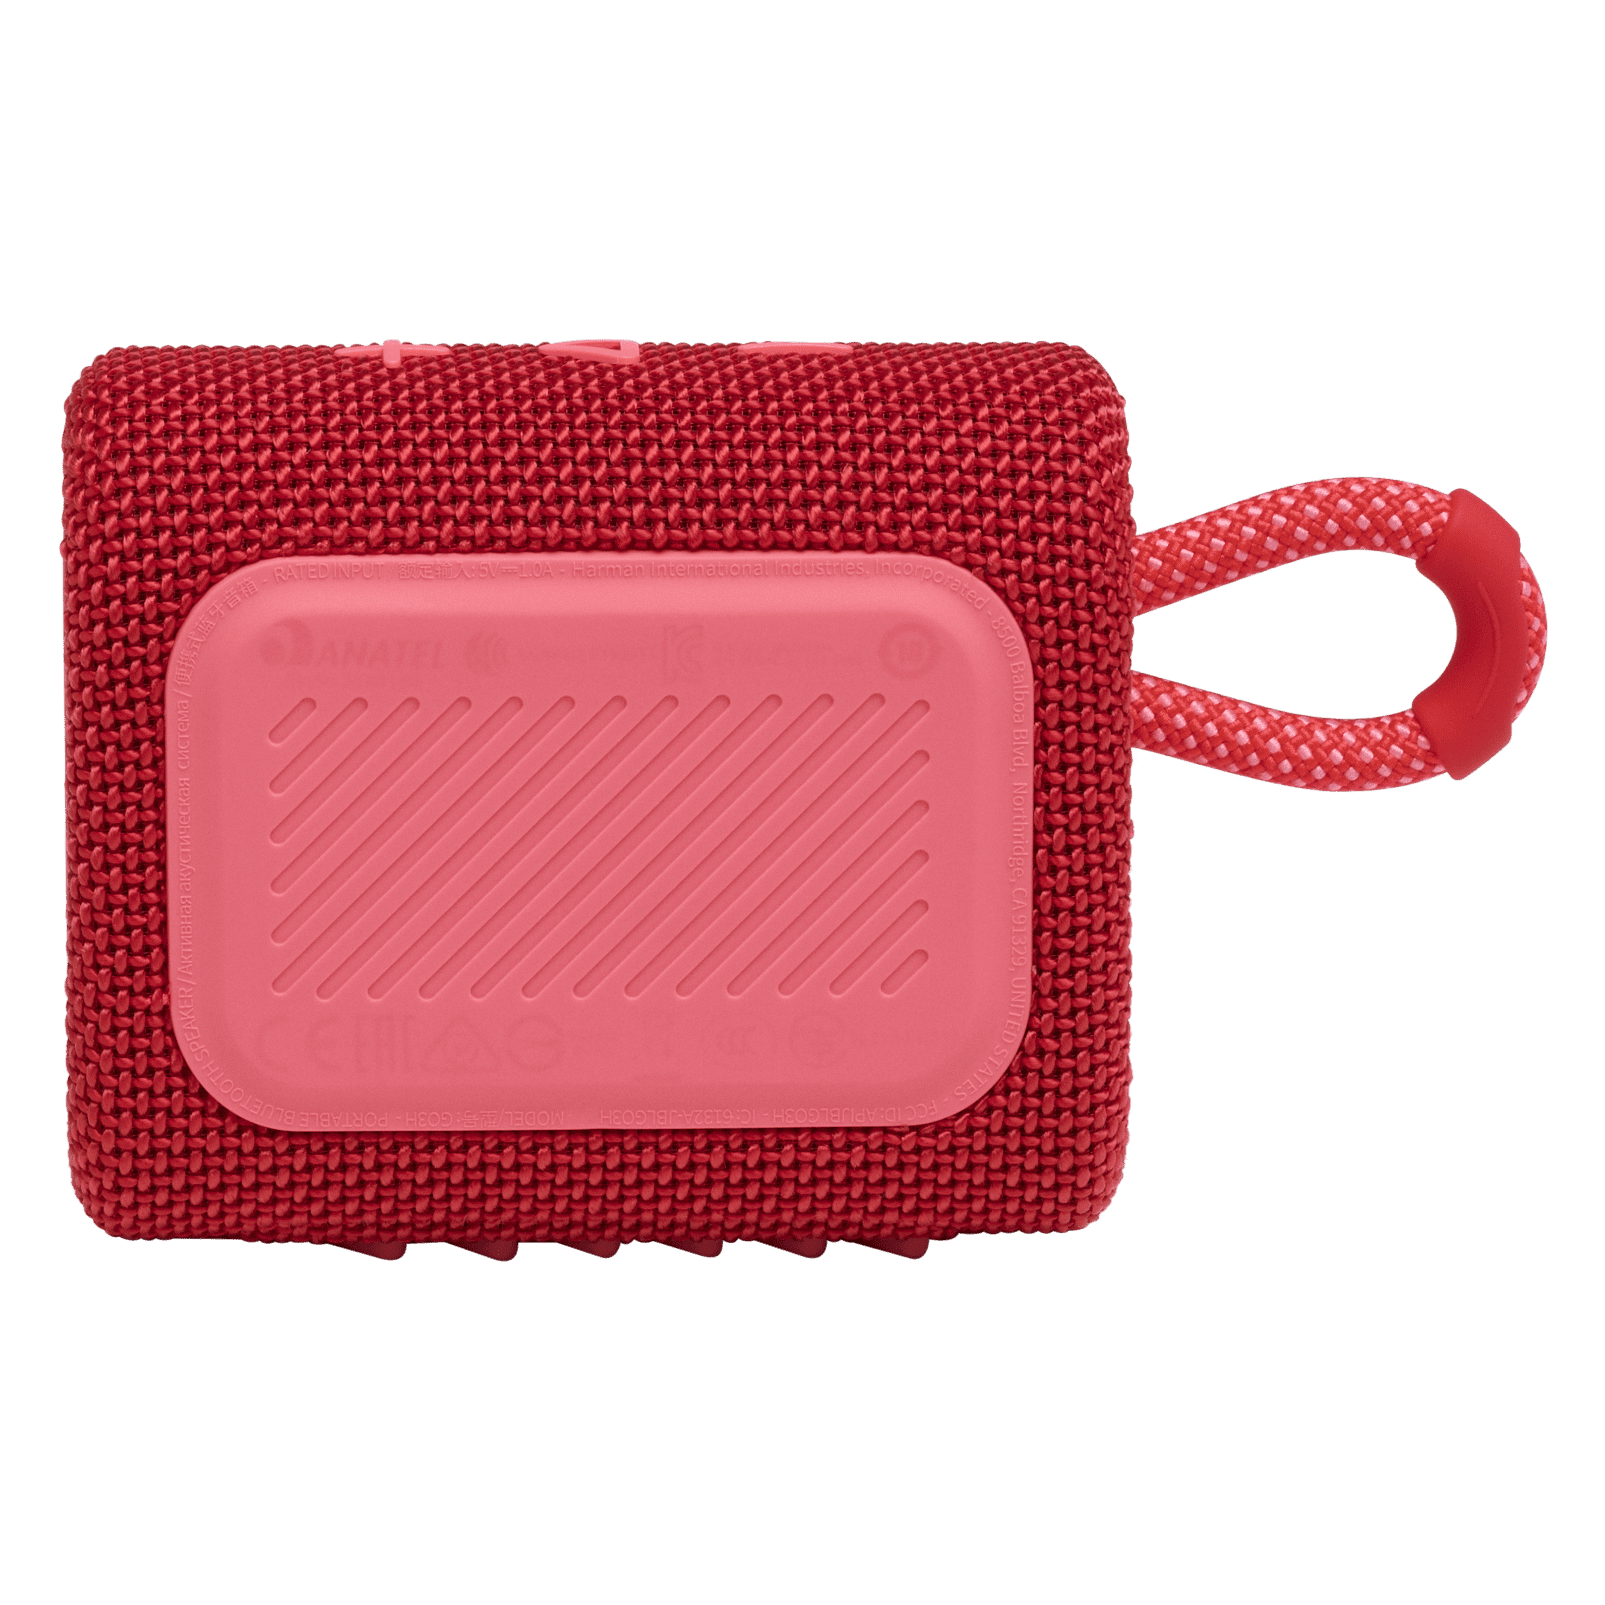 JBL Go 3 Portable Bluetooth Speaker (Red) JBLGO3REDAM B&H Photo